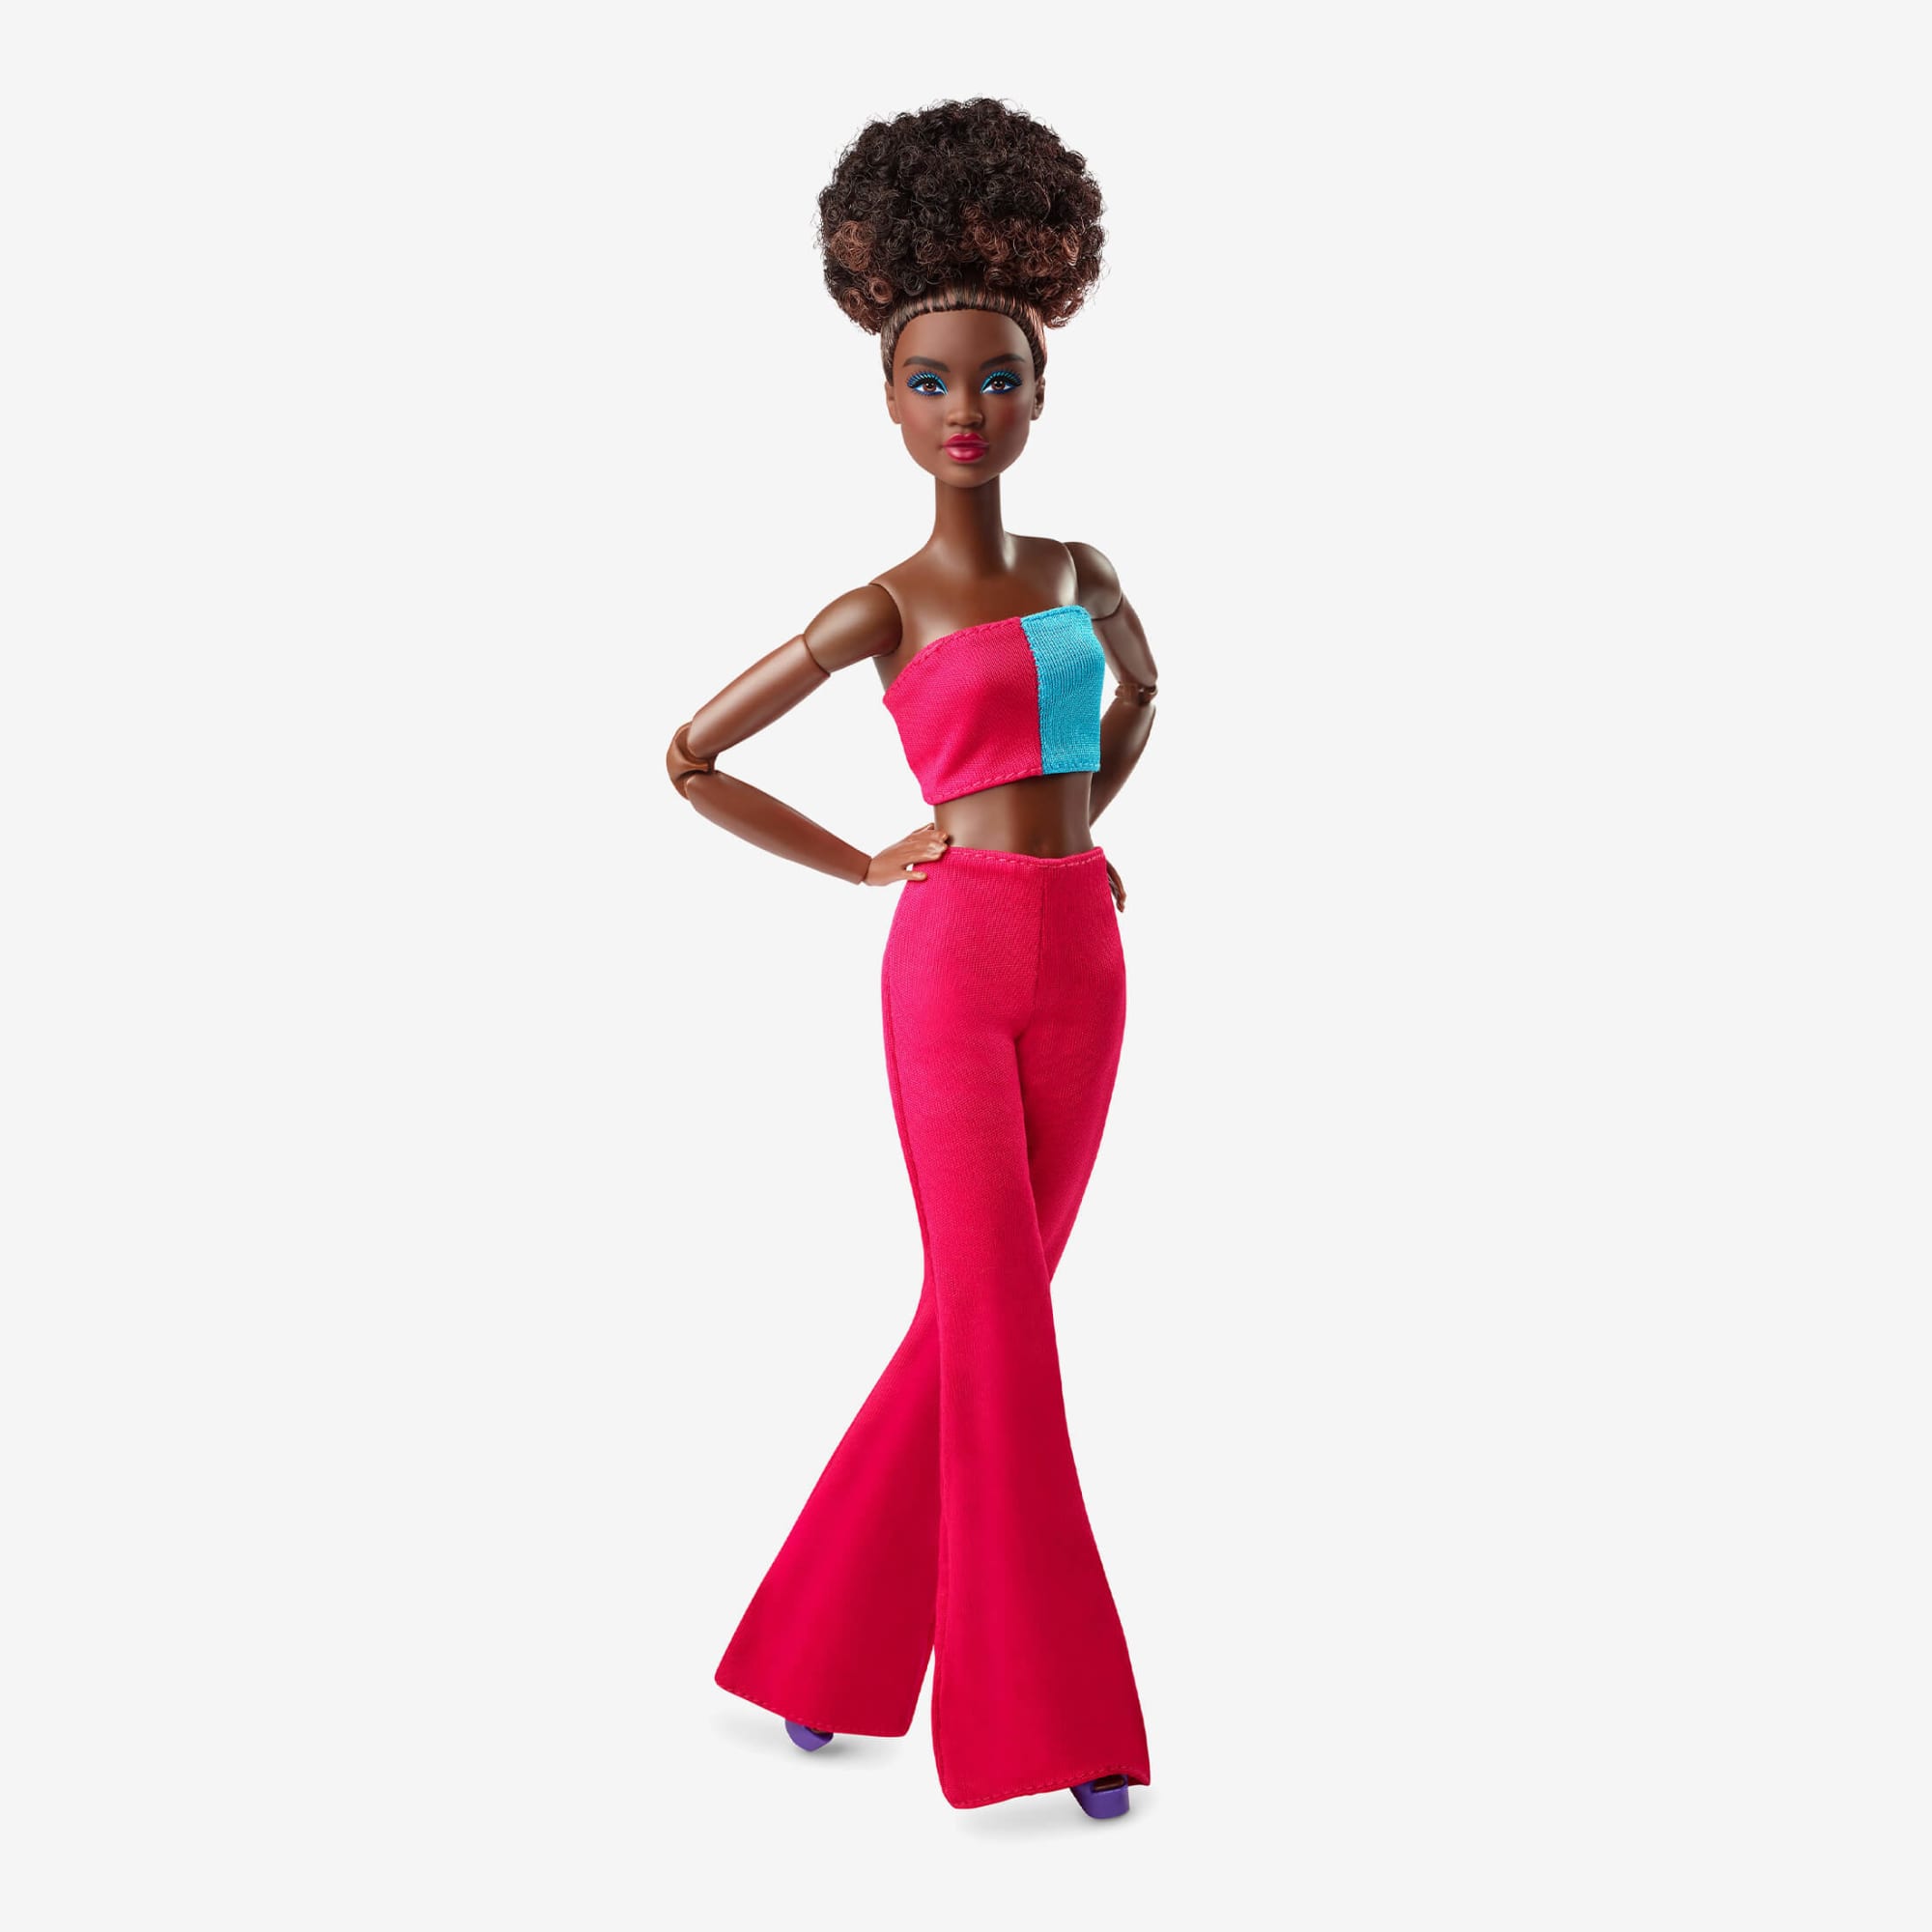 Boneco Ken filme Barbie 2023, Look surfista, item autentico